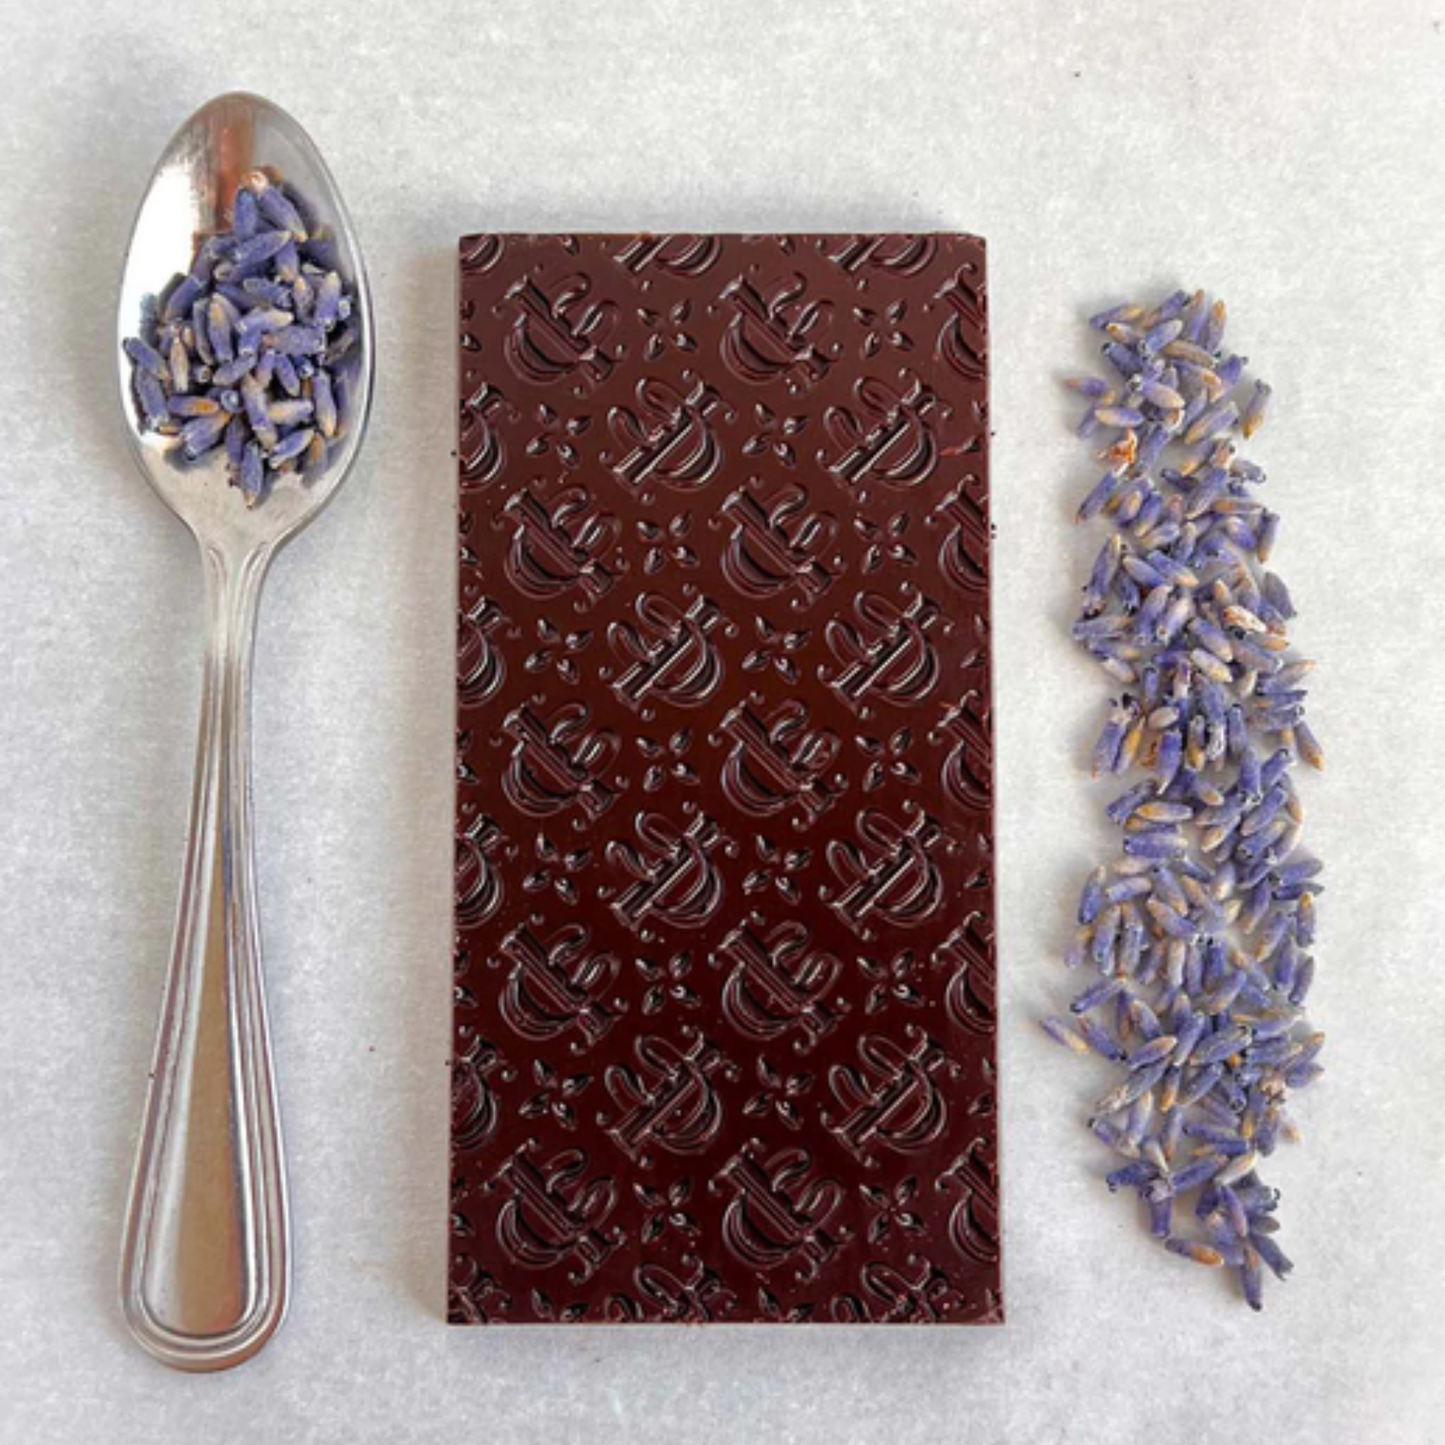 Lavender Chocolate - Craft Chocolate Bar